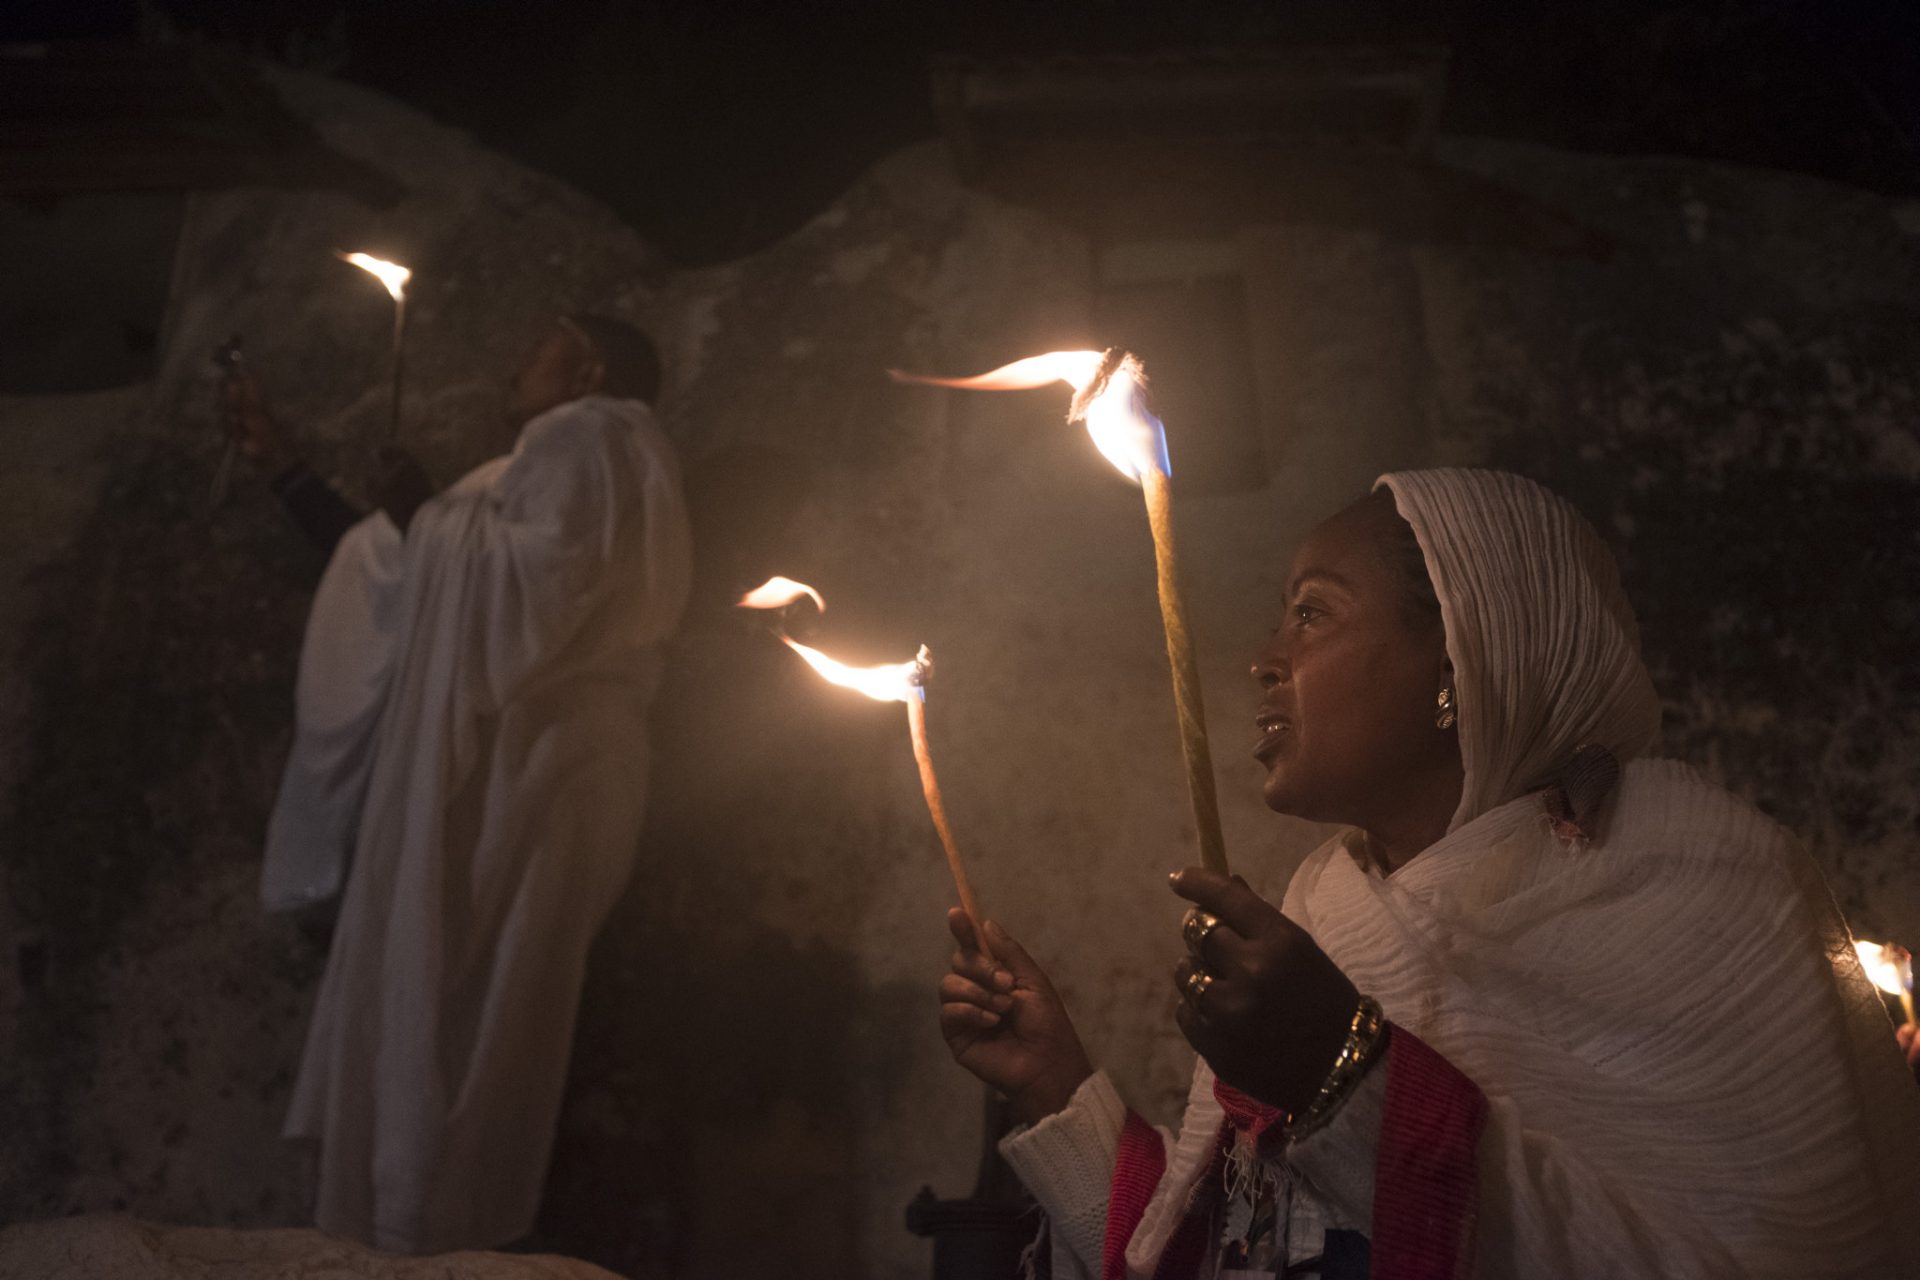 Ethiopian Orthodox Christians Celebrate Easter